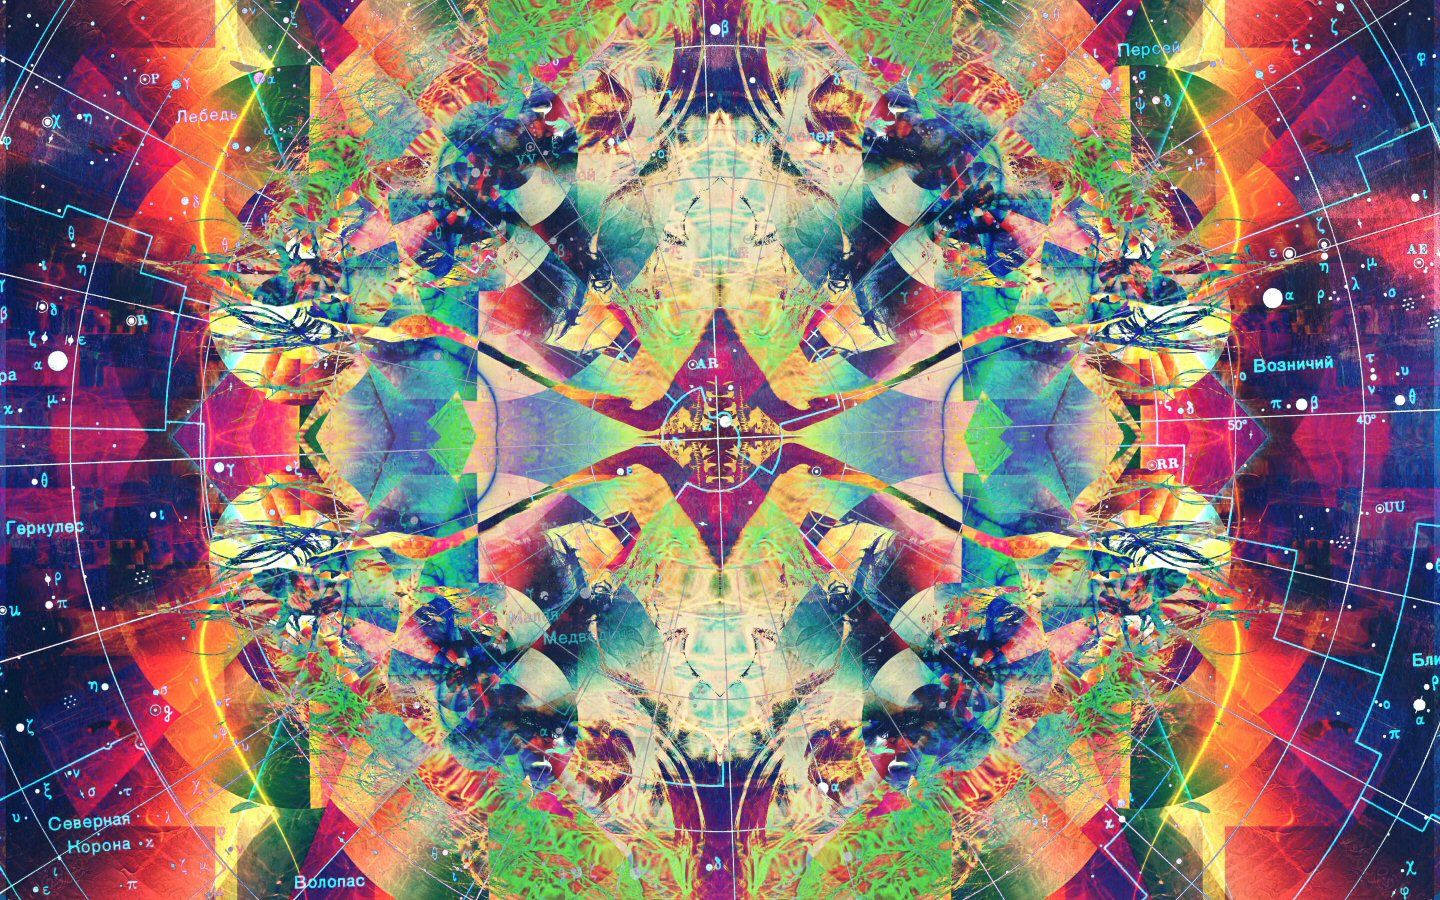 "A psychedelic trip through a kaleidoscopic world!" Wallpaper